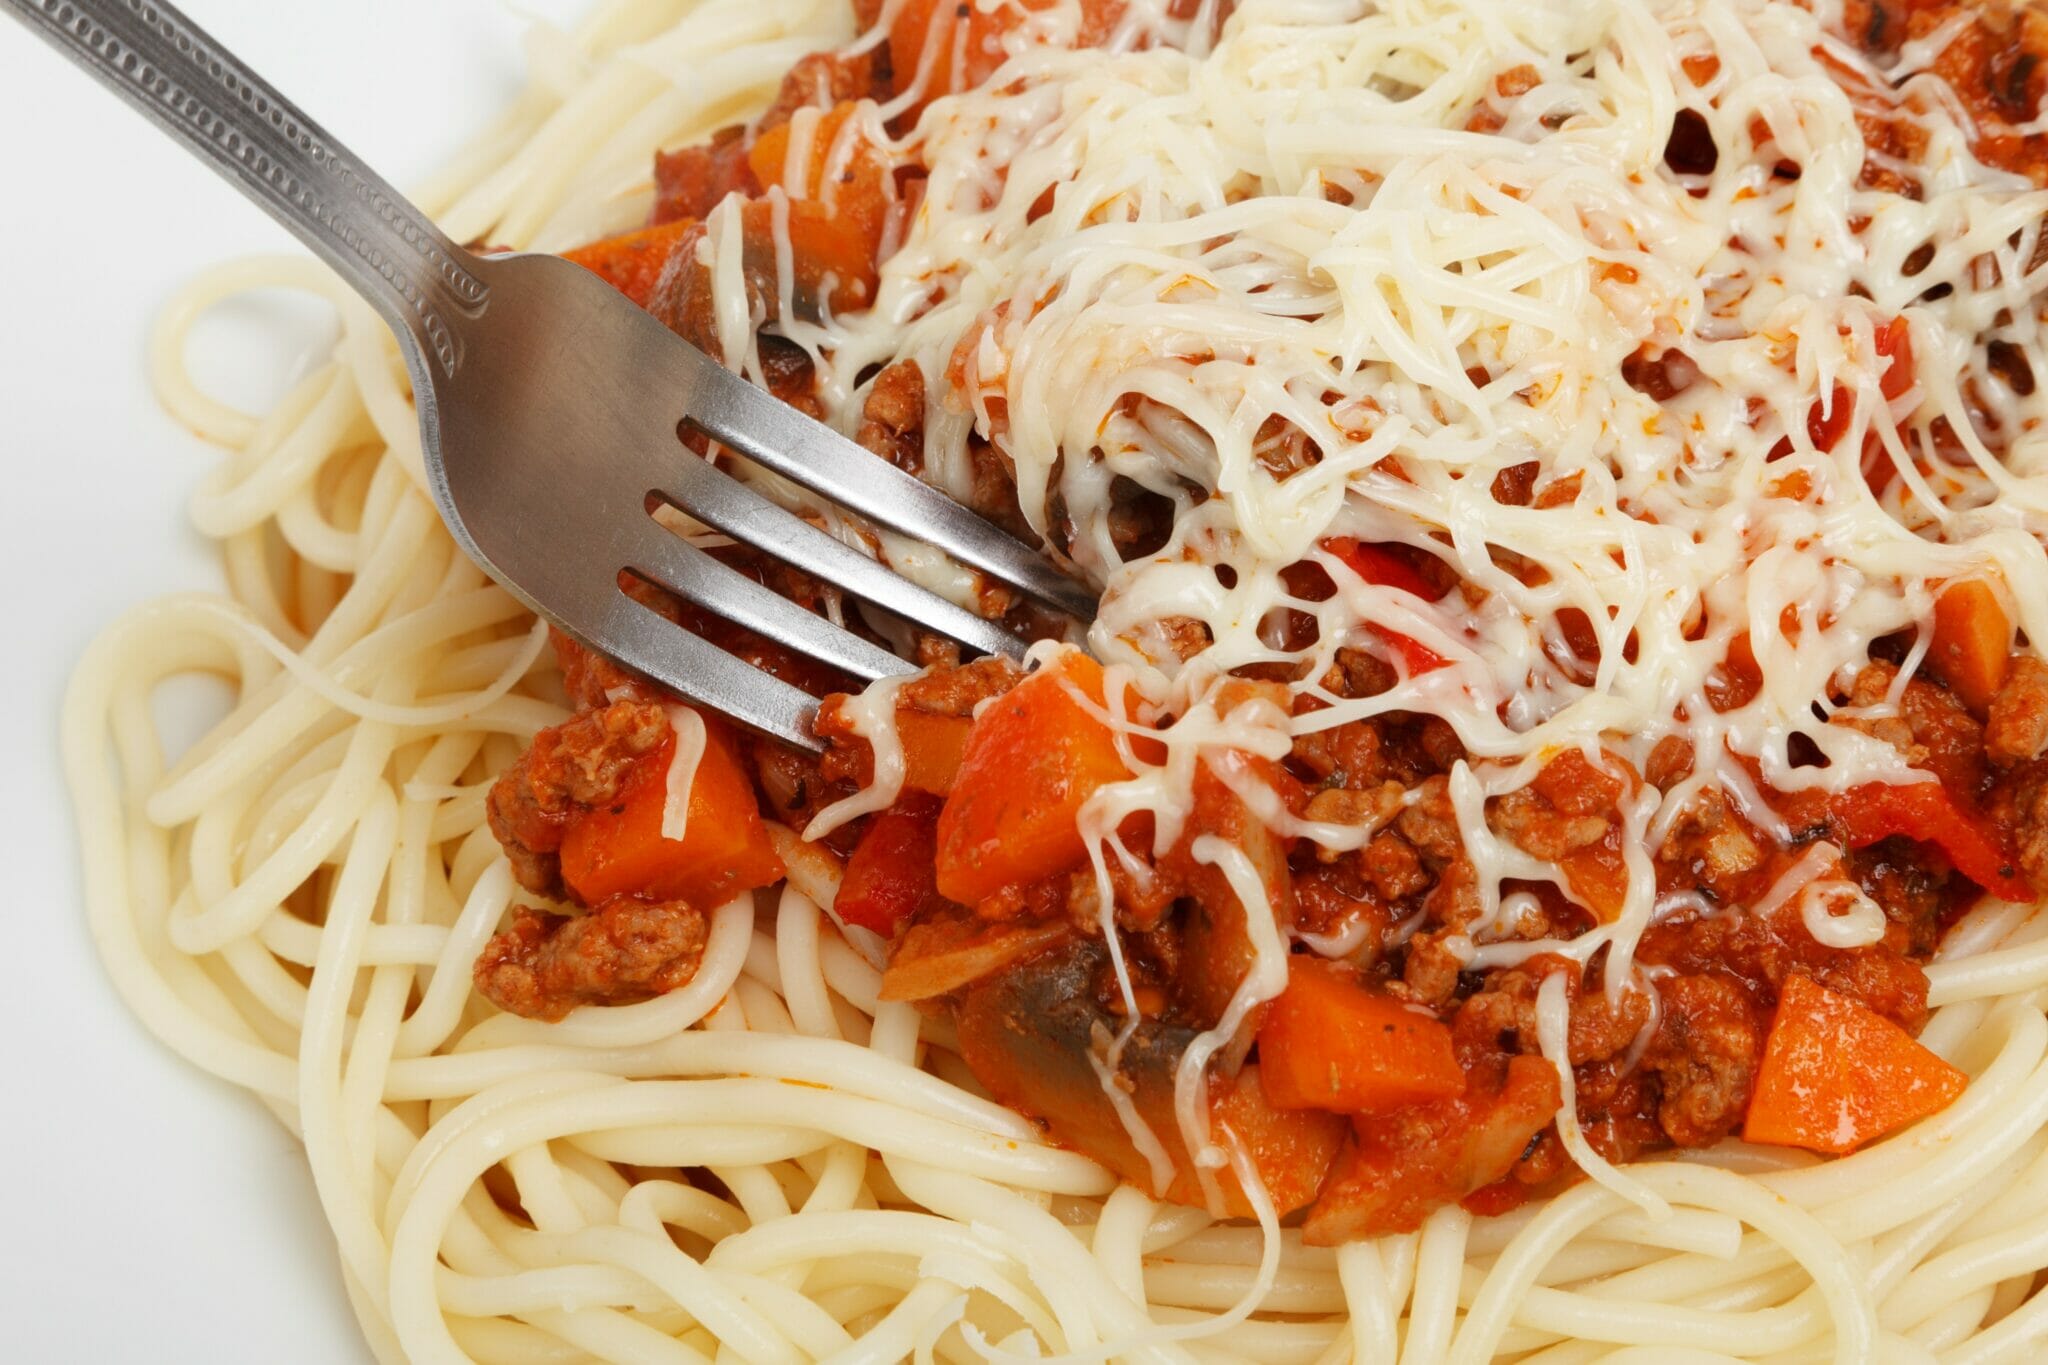 spaghetti - family meeting - Sociocracy For All